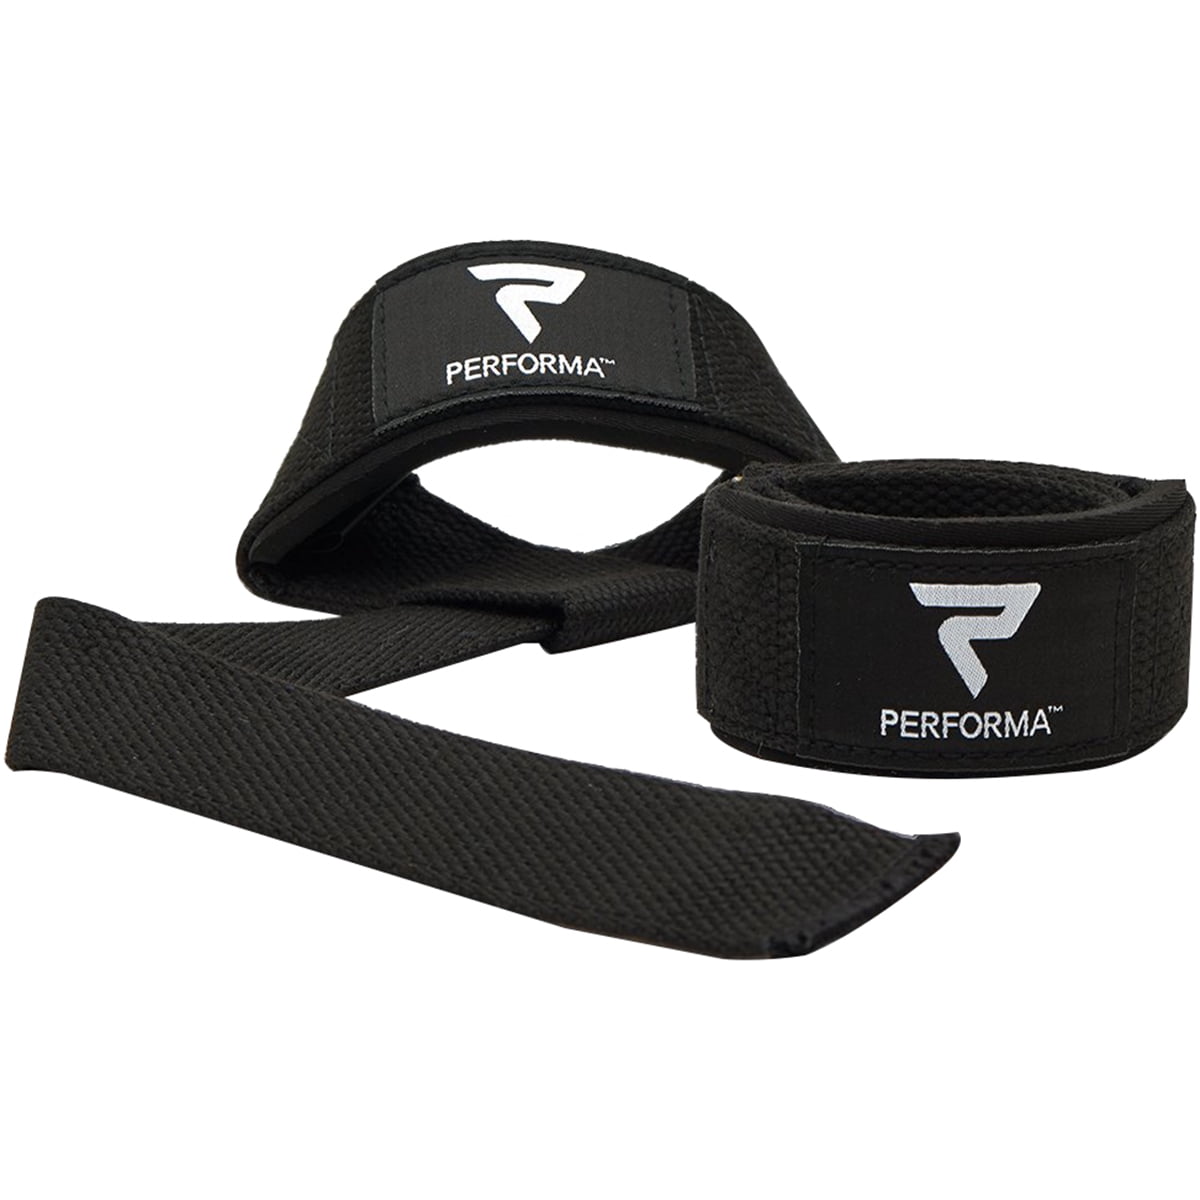 Performa Premium Padded Weight Lifting Straps - Black/White 